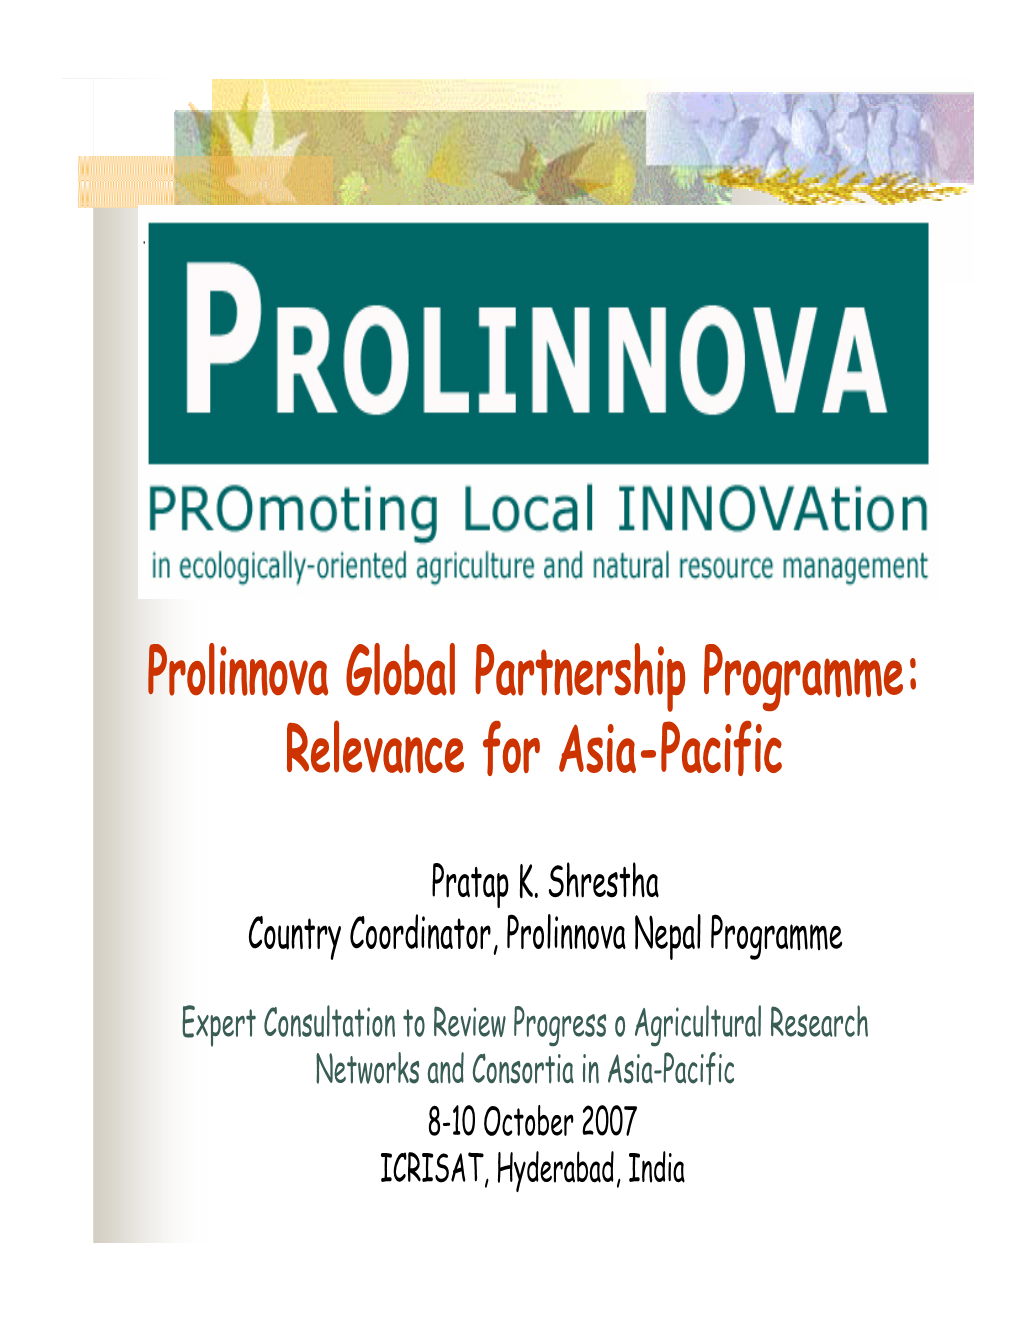 Prolinnova Global Partnership Programme: Relevance for Asia-Pacific